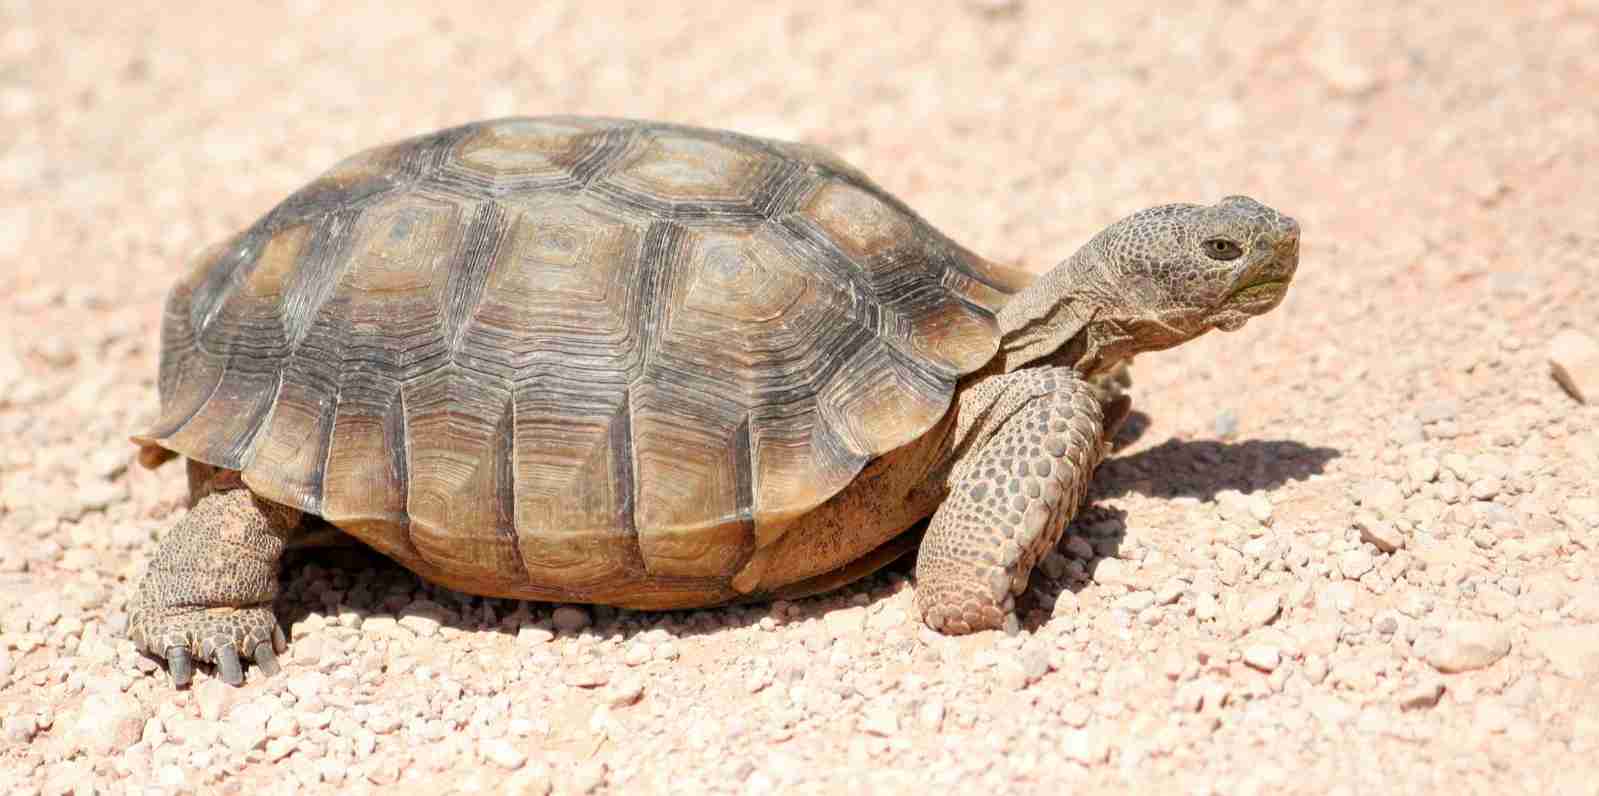 The talkative tortoise